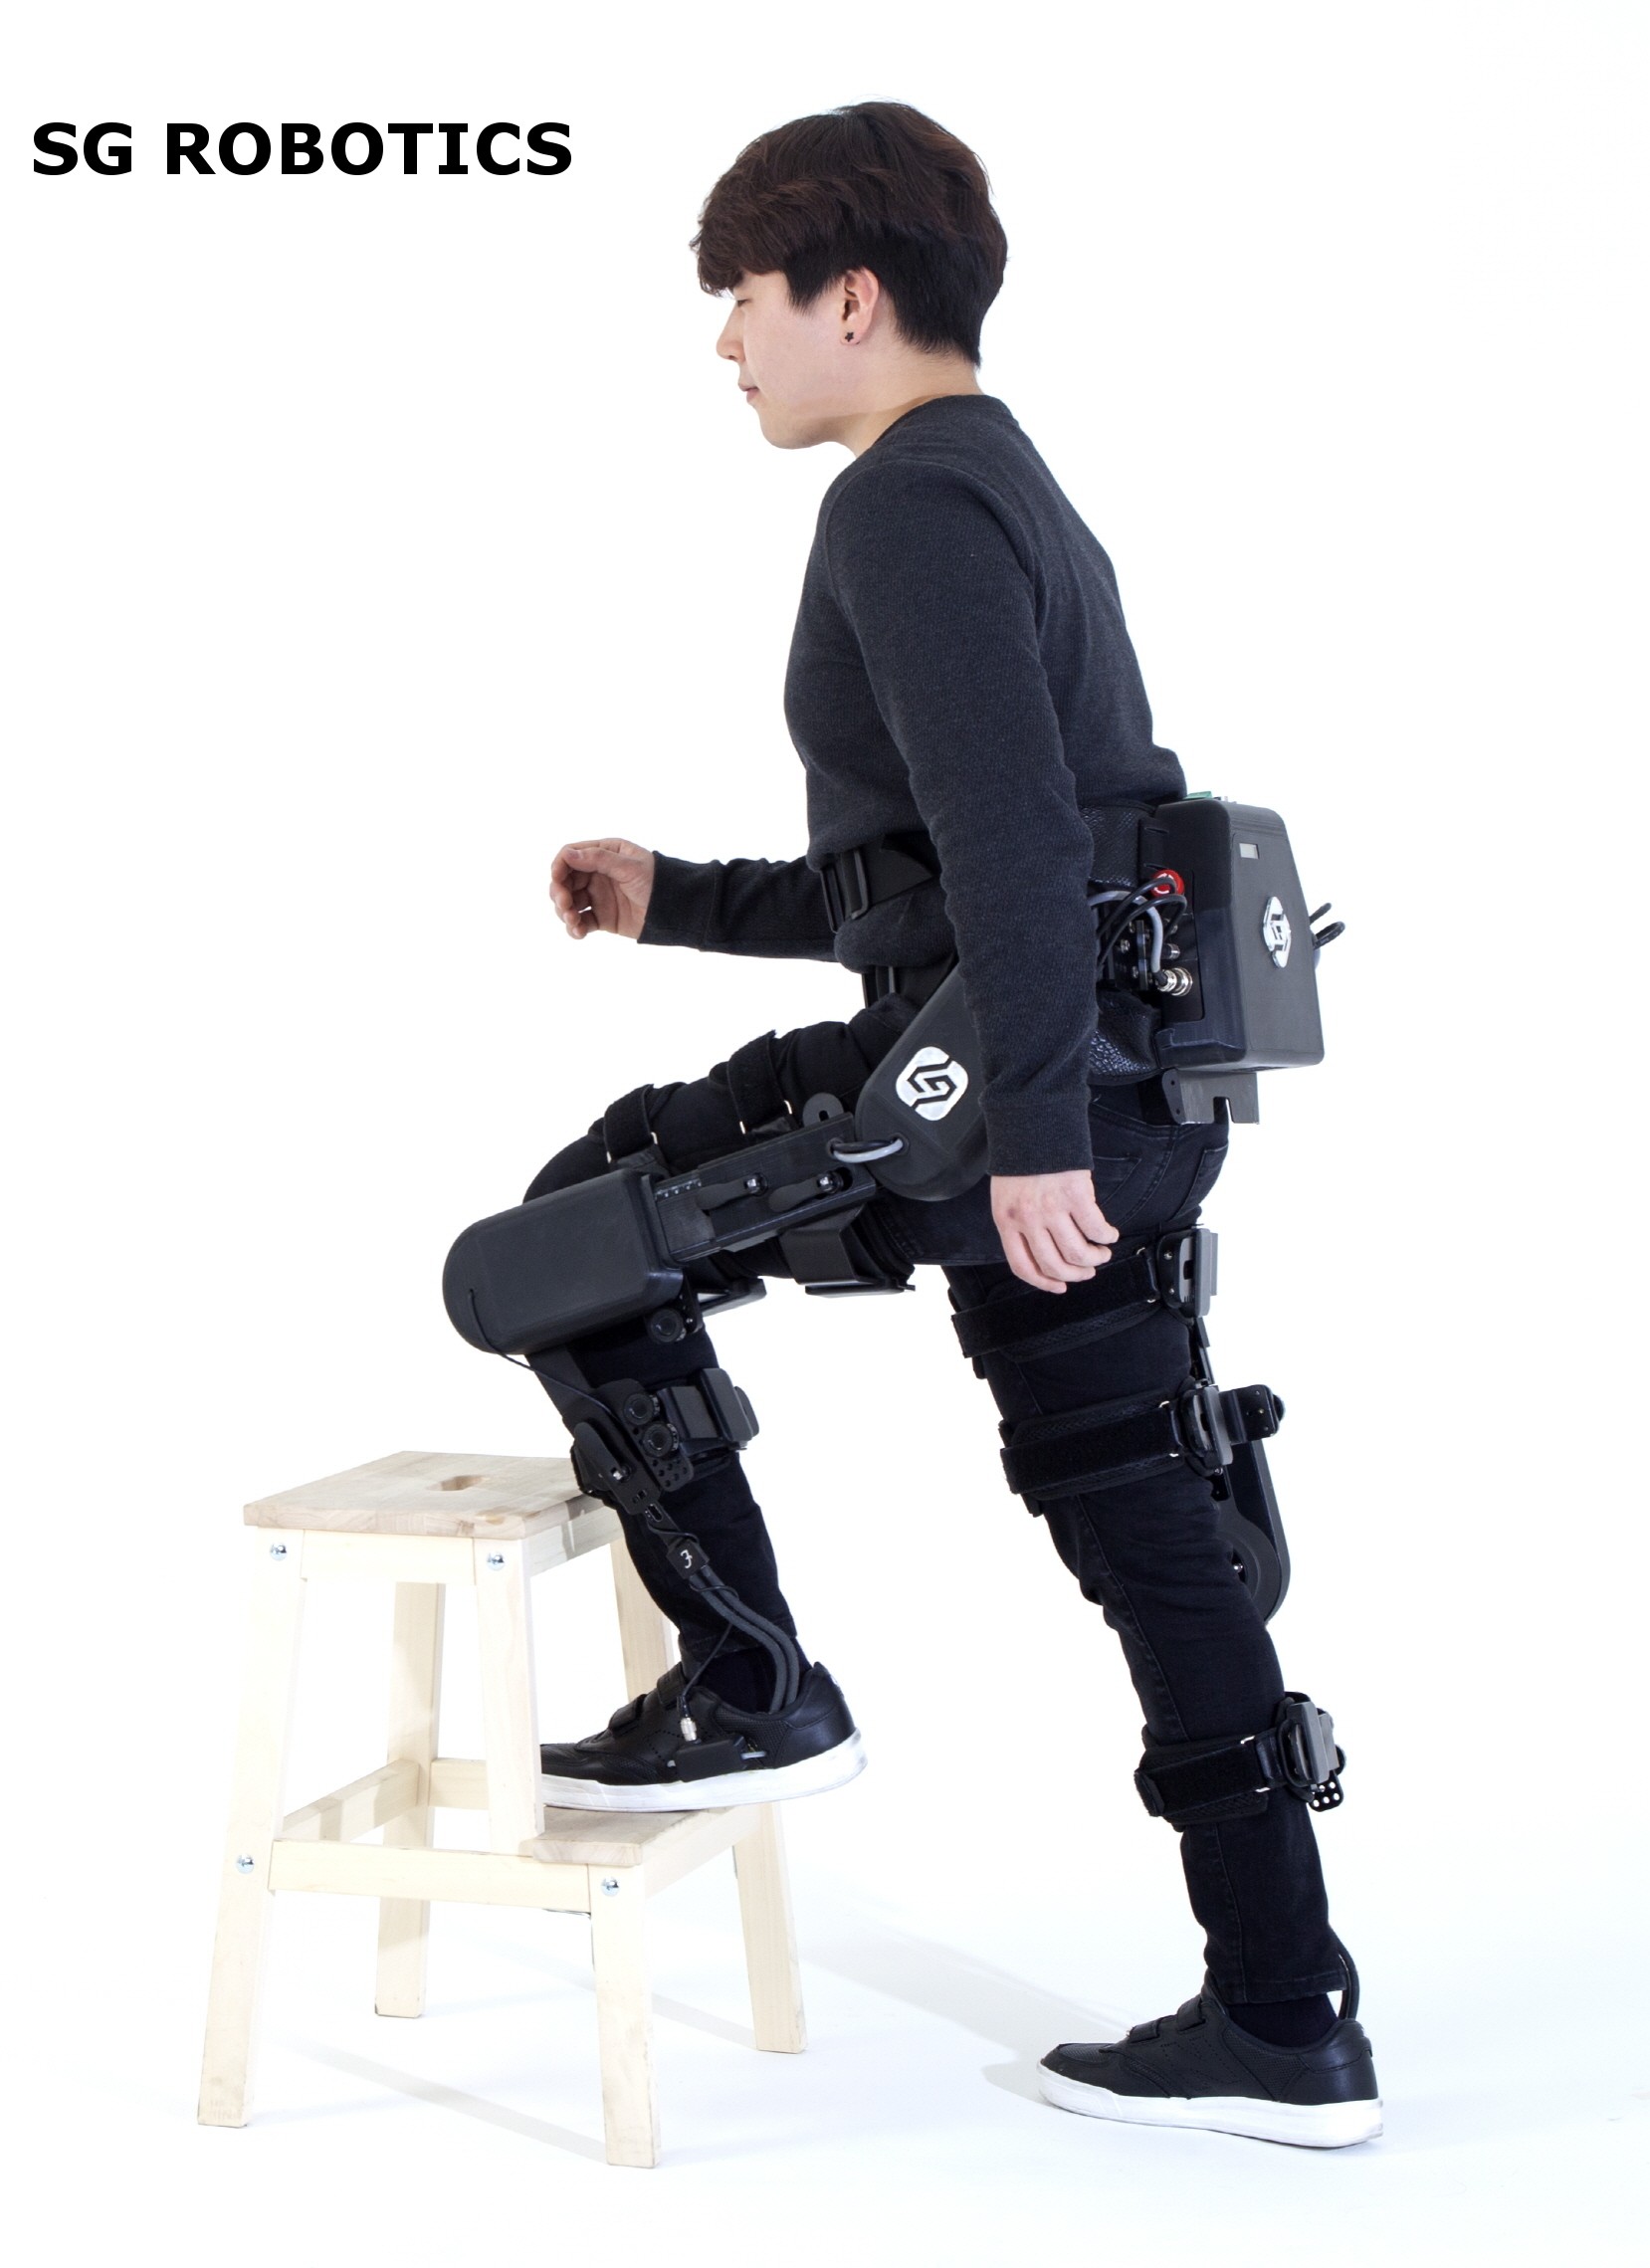 A model poses with SG Robotics equipment.